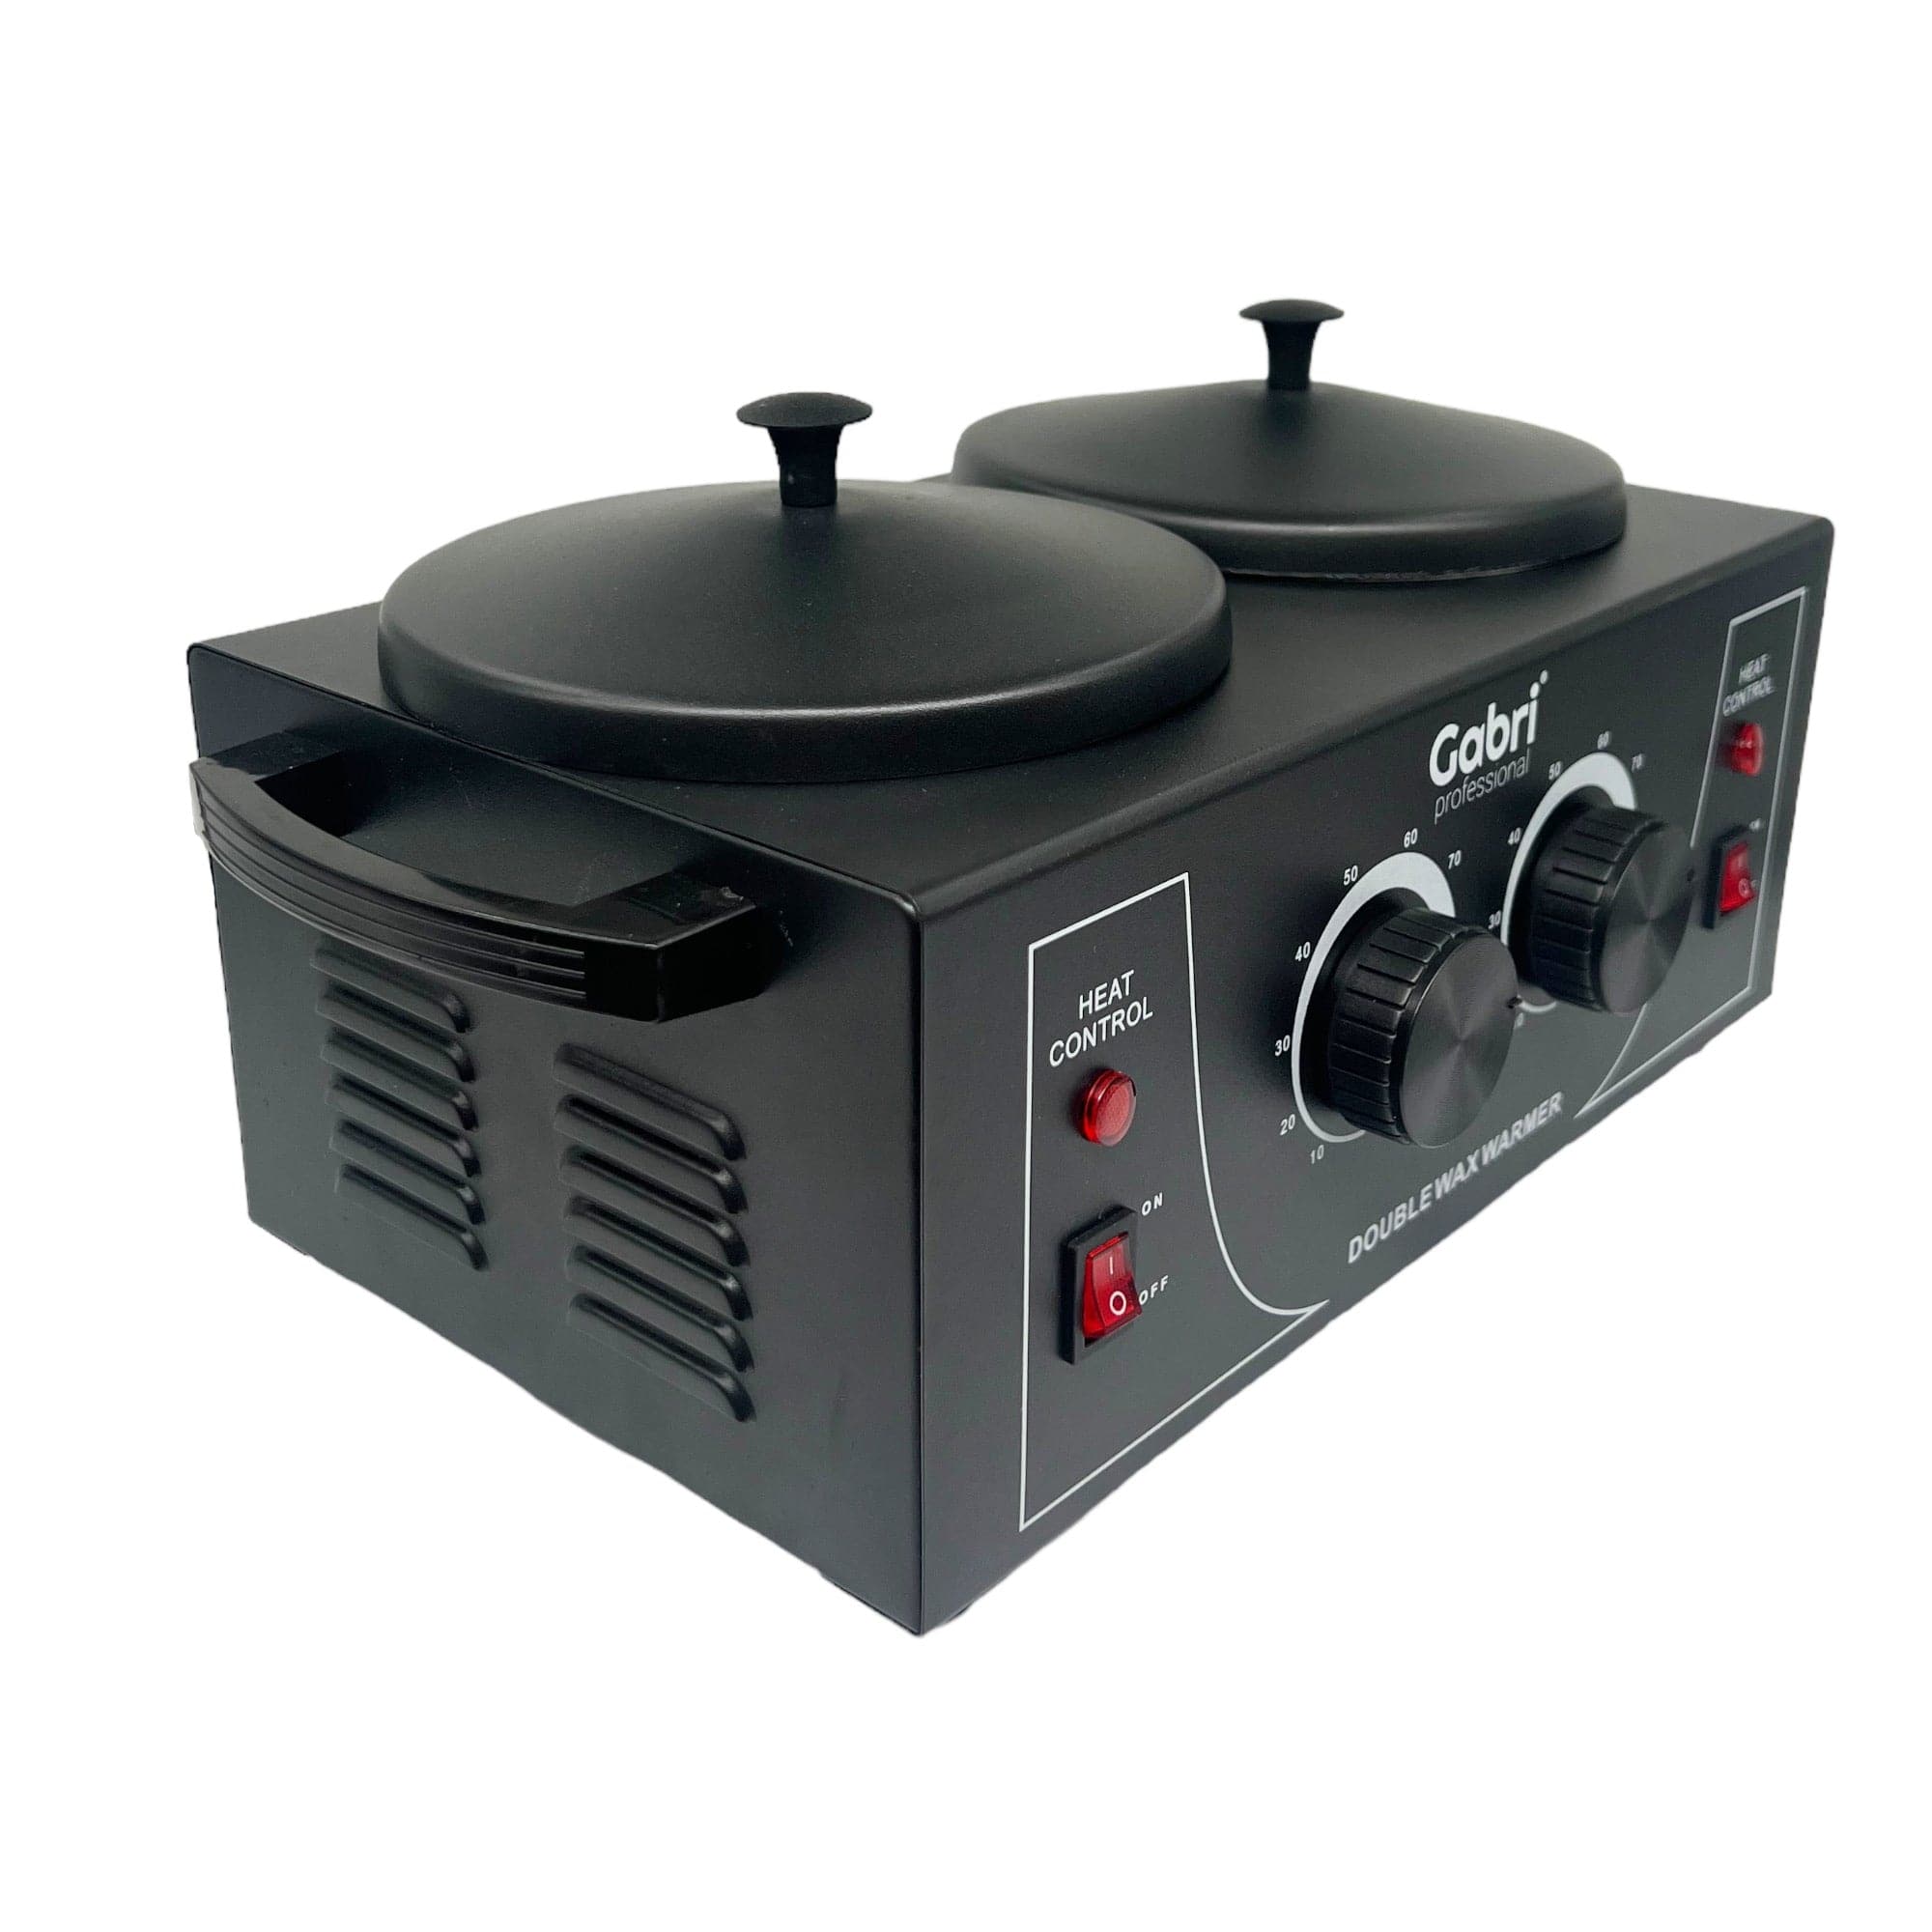 Gabri - Wax Heater Warmer Electric Double Pot (Black)